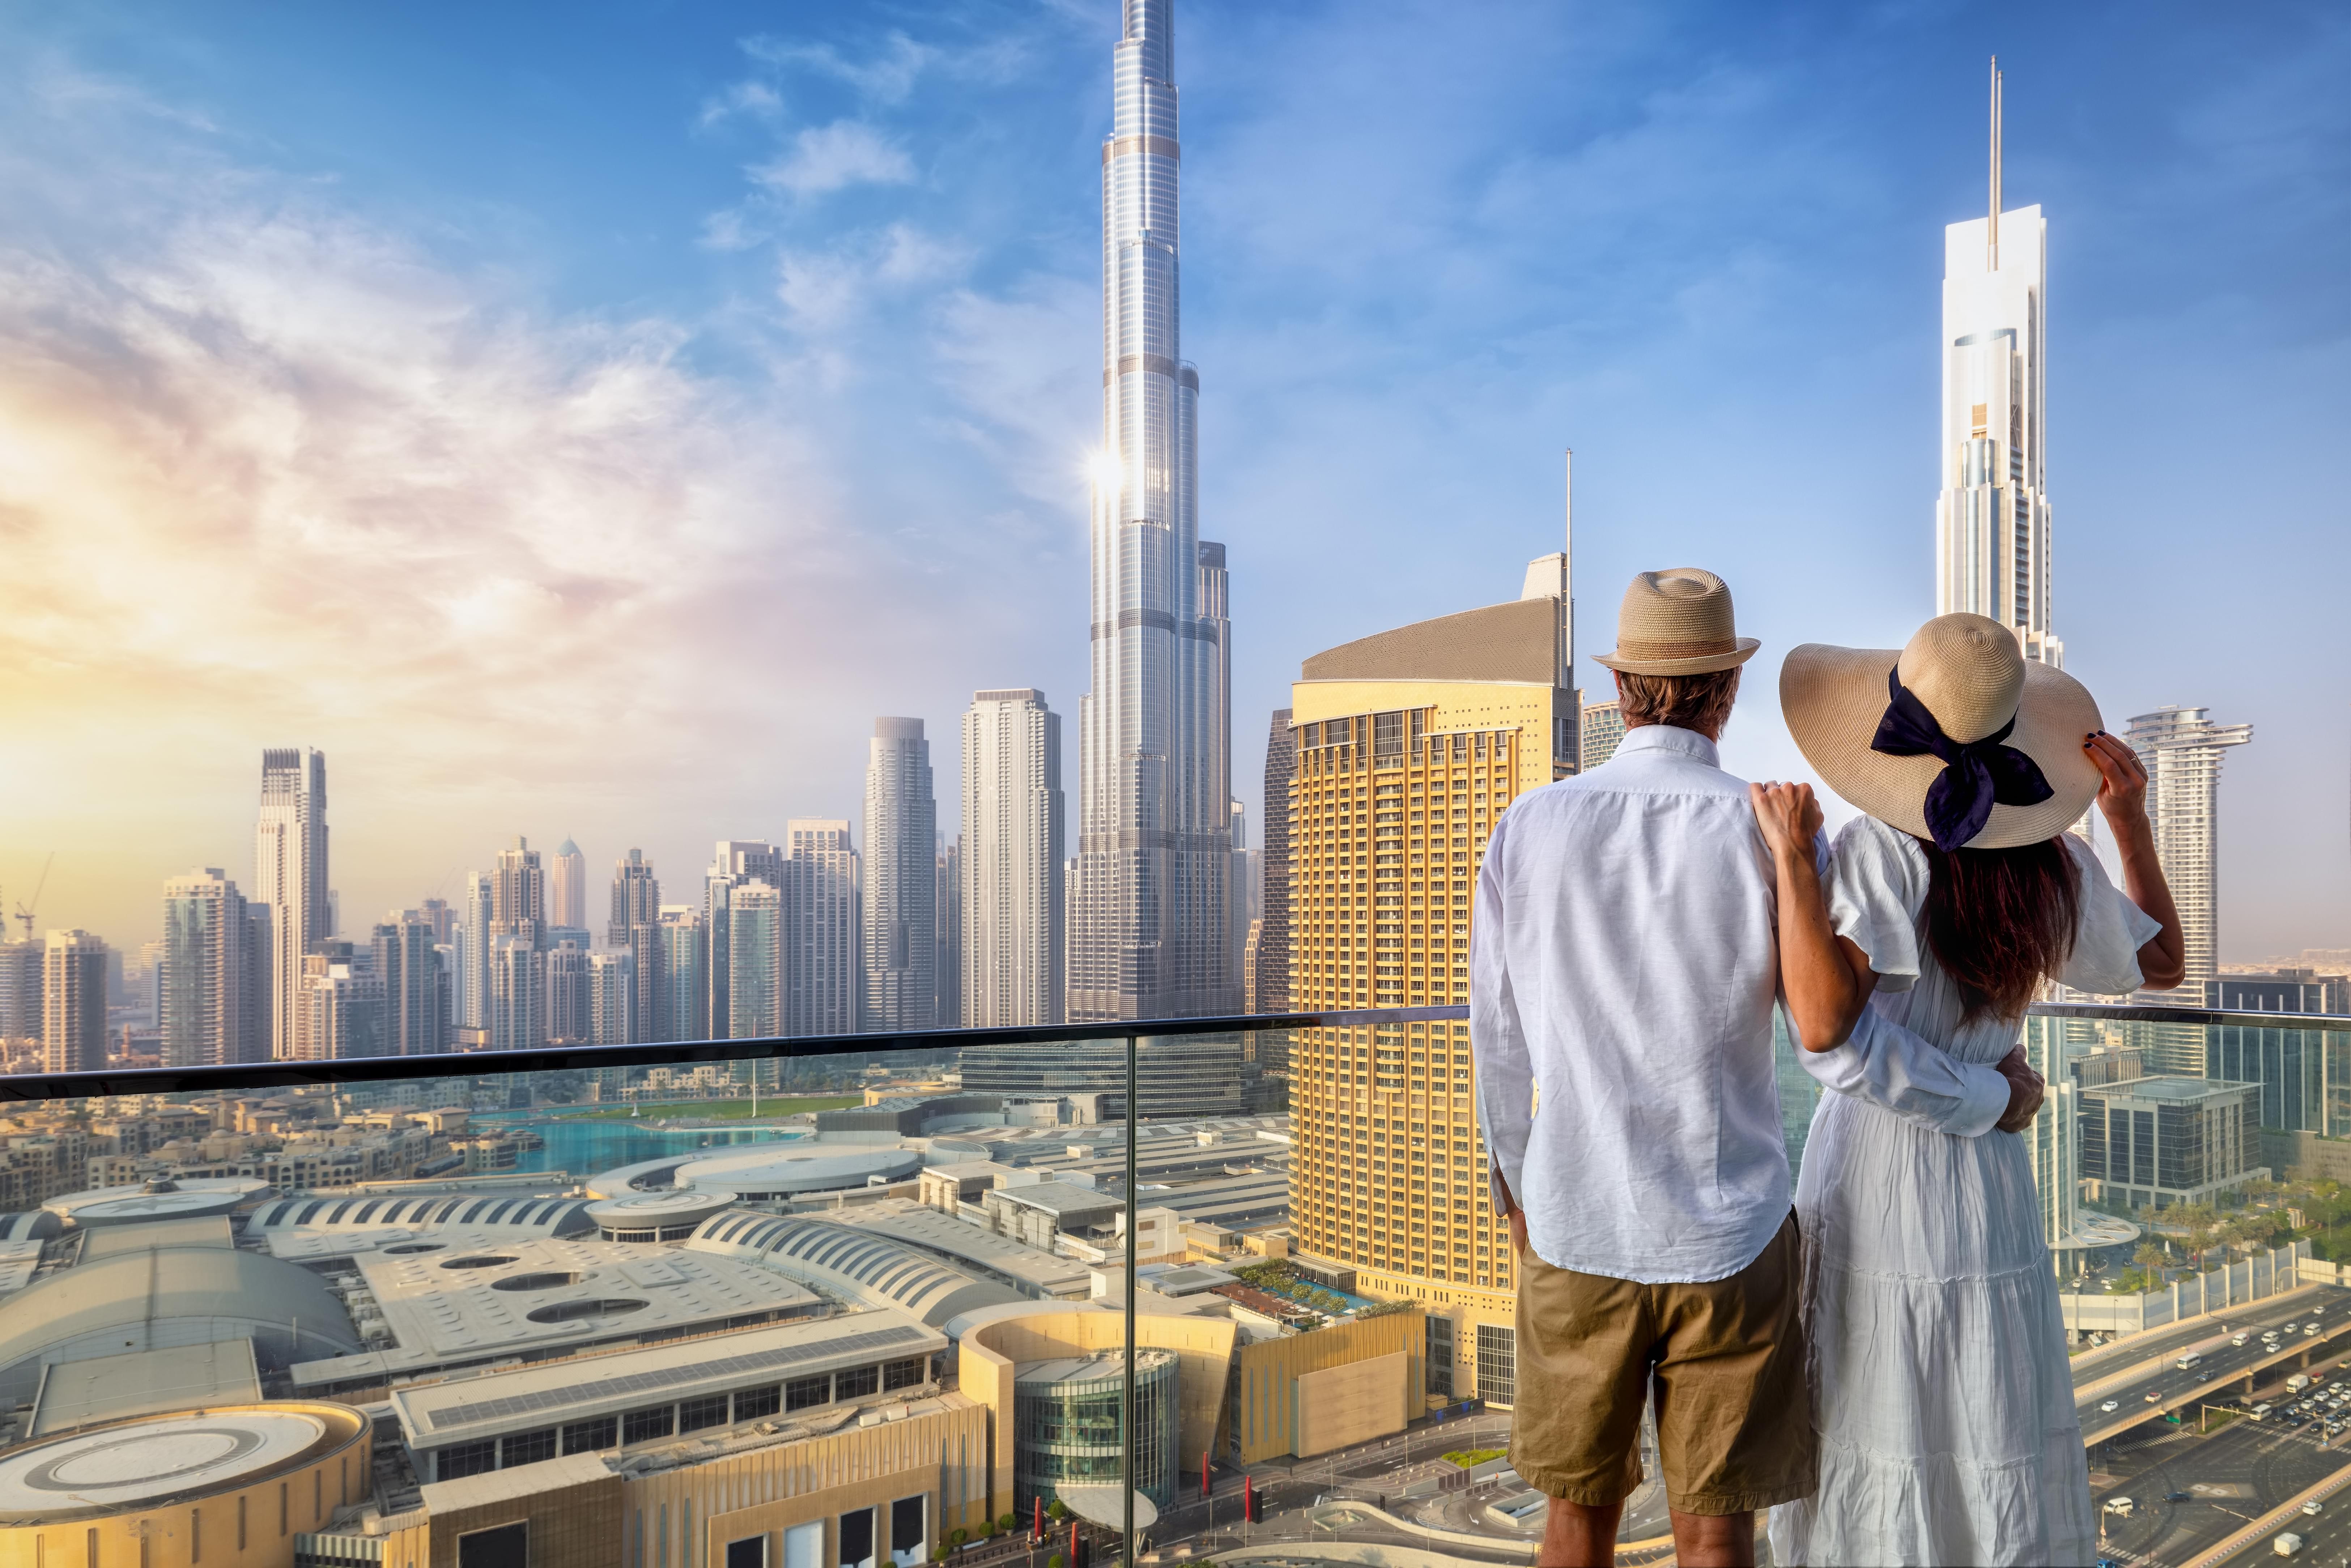 Tourist admiring the views of Burj Khalifa